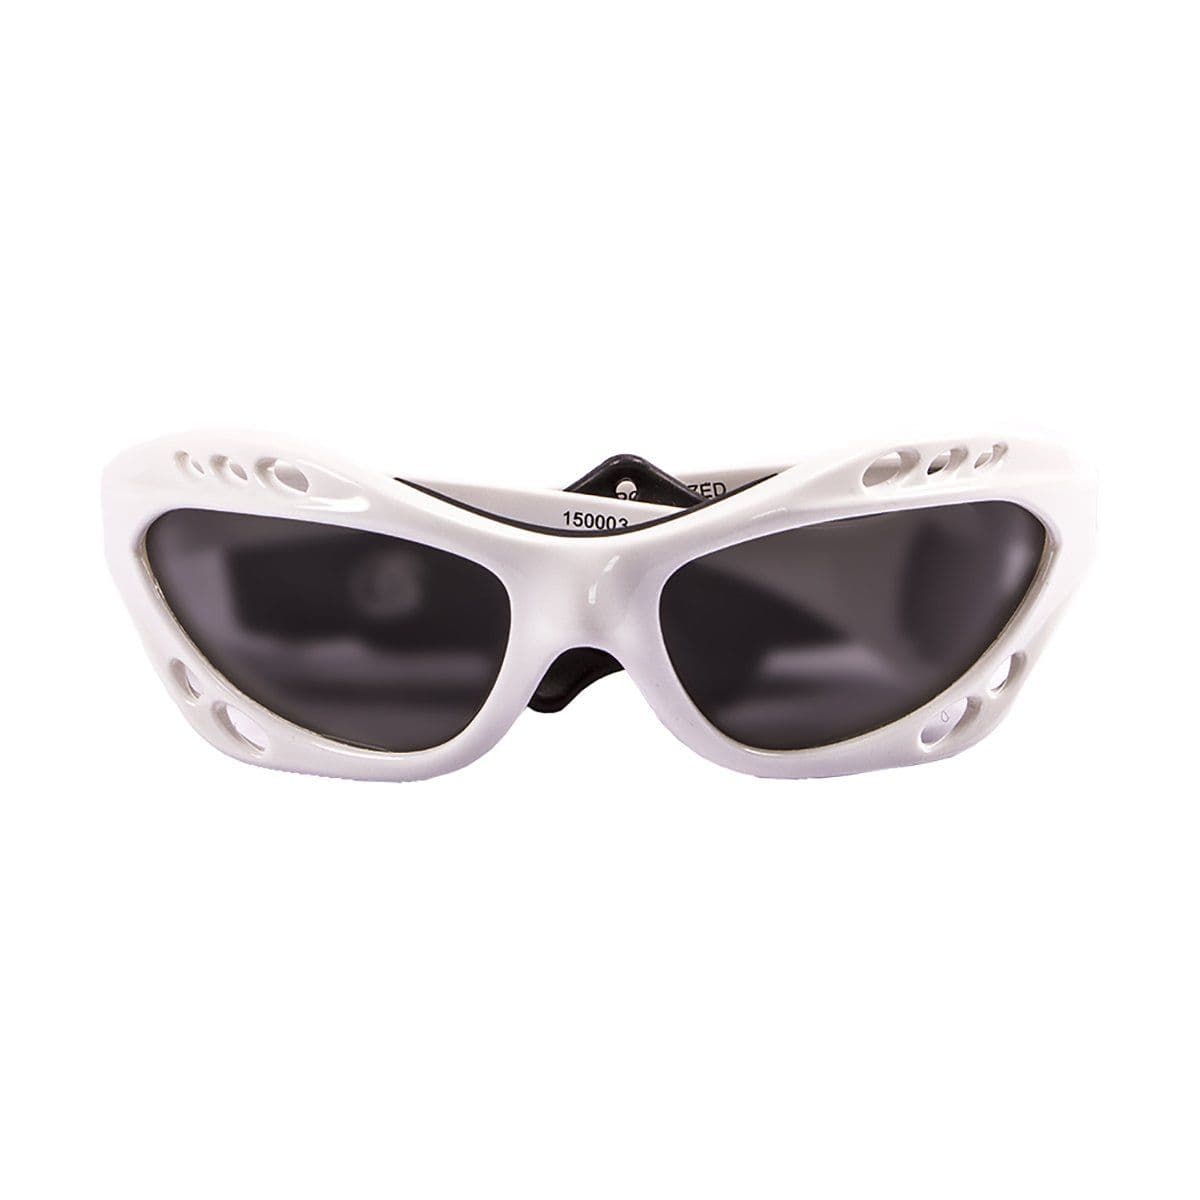 Ocean Cumbuco Water Sport Sunglasses